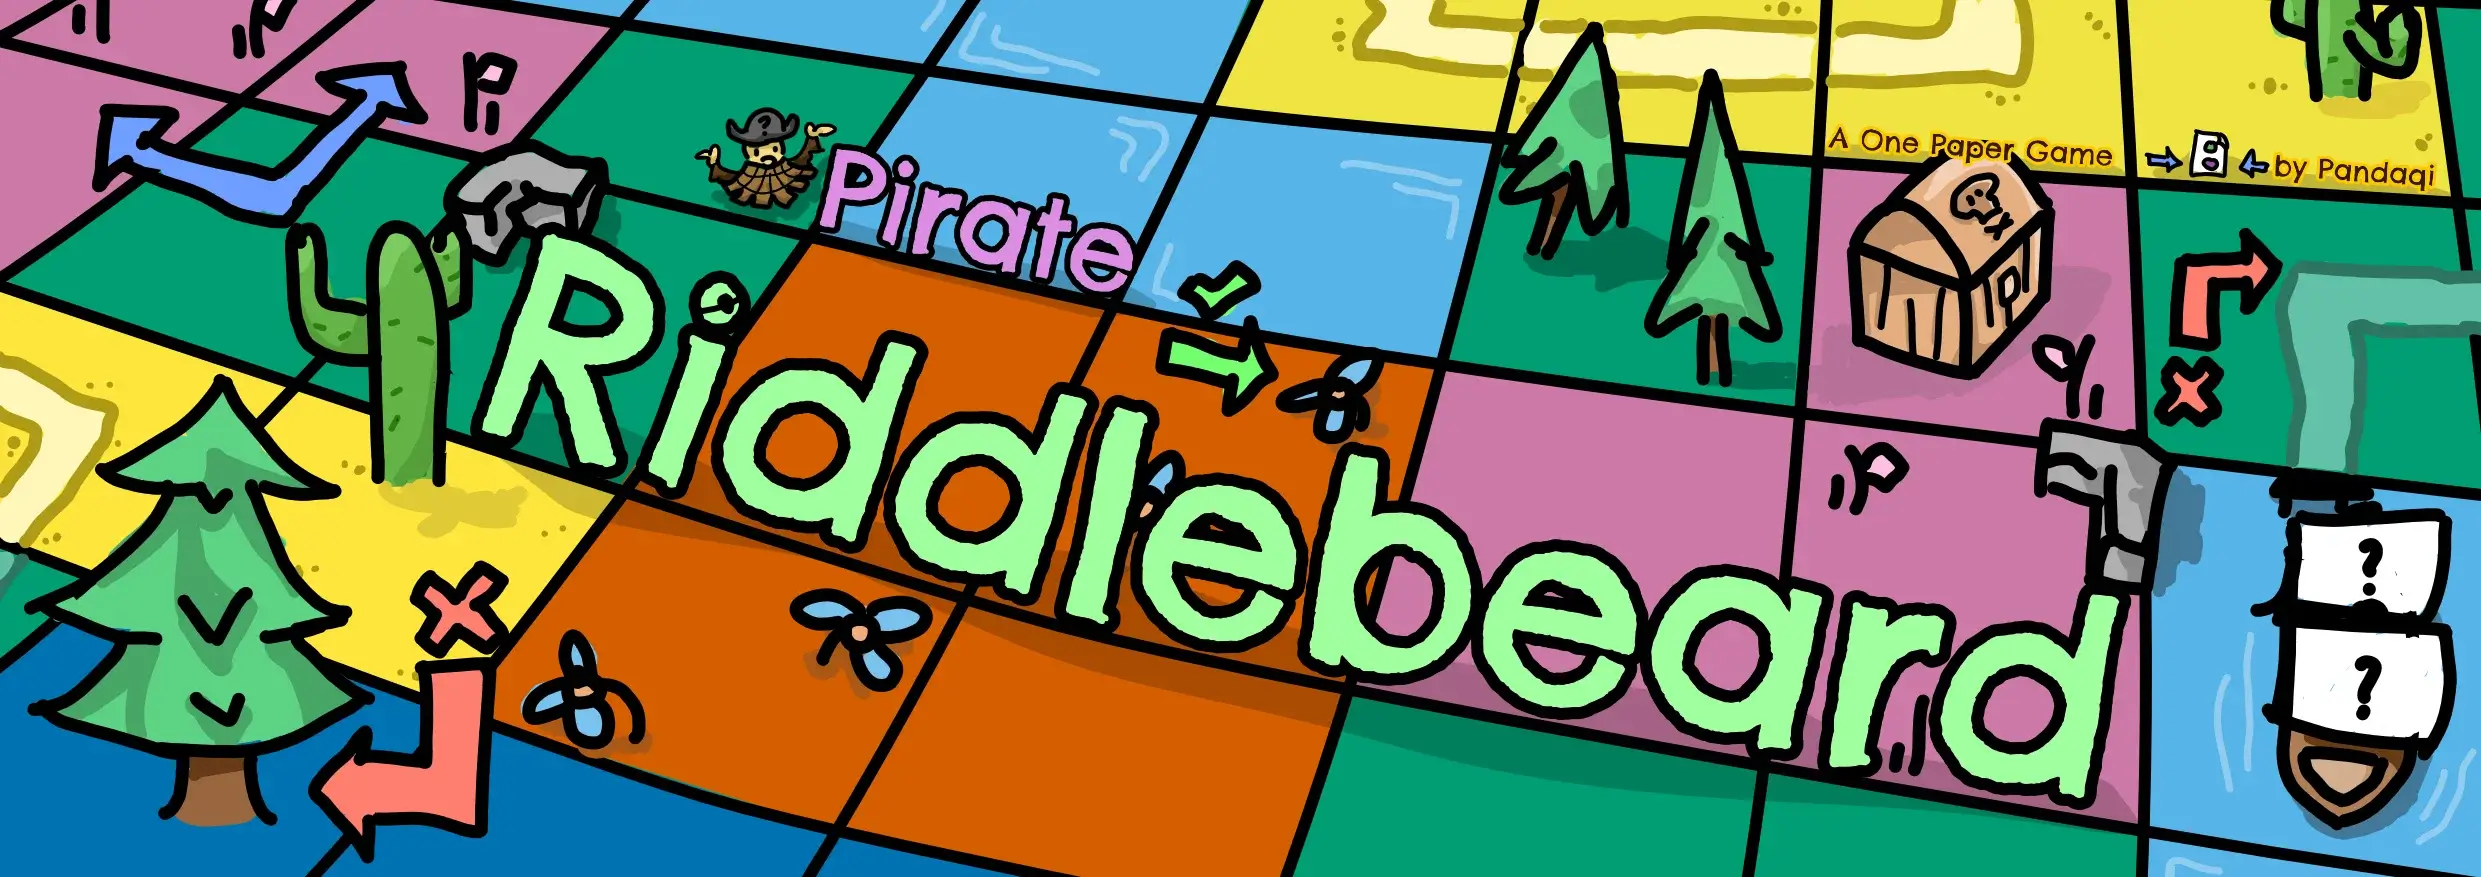 Pirateriddlebeard header